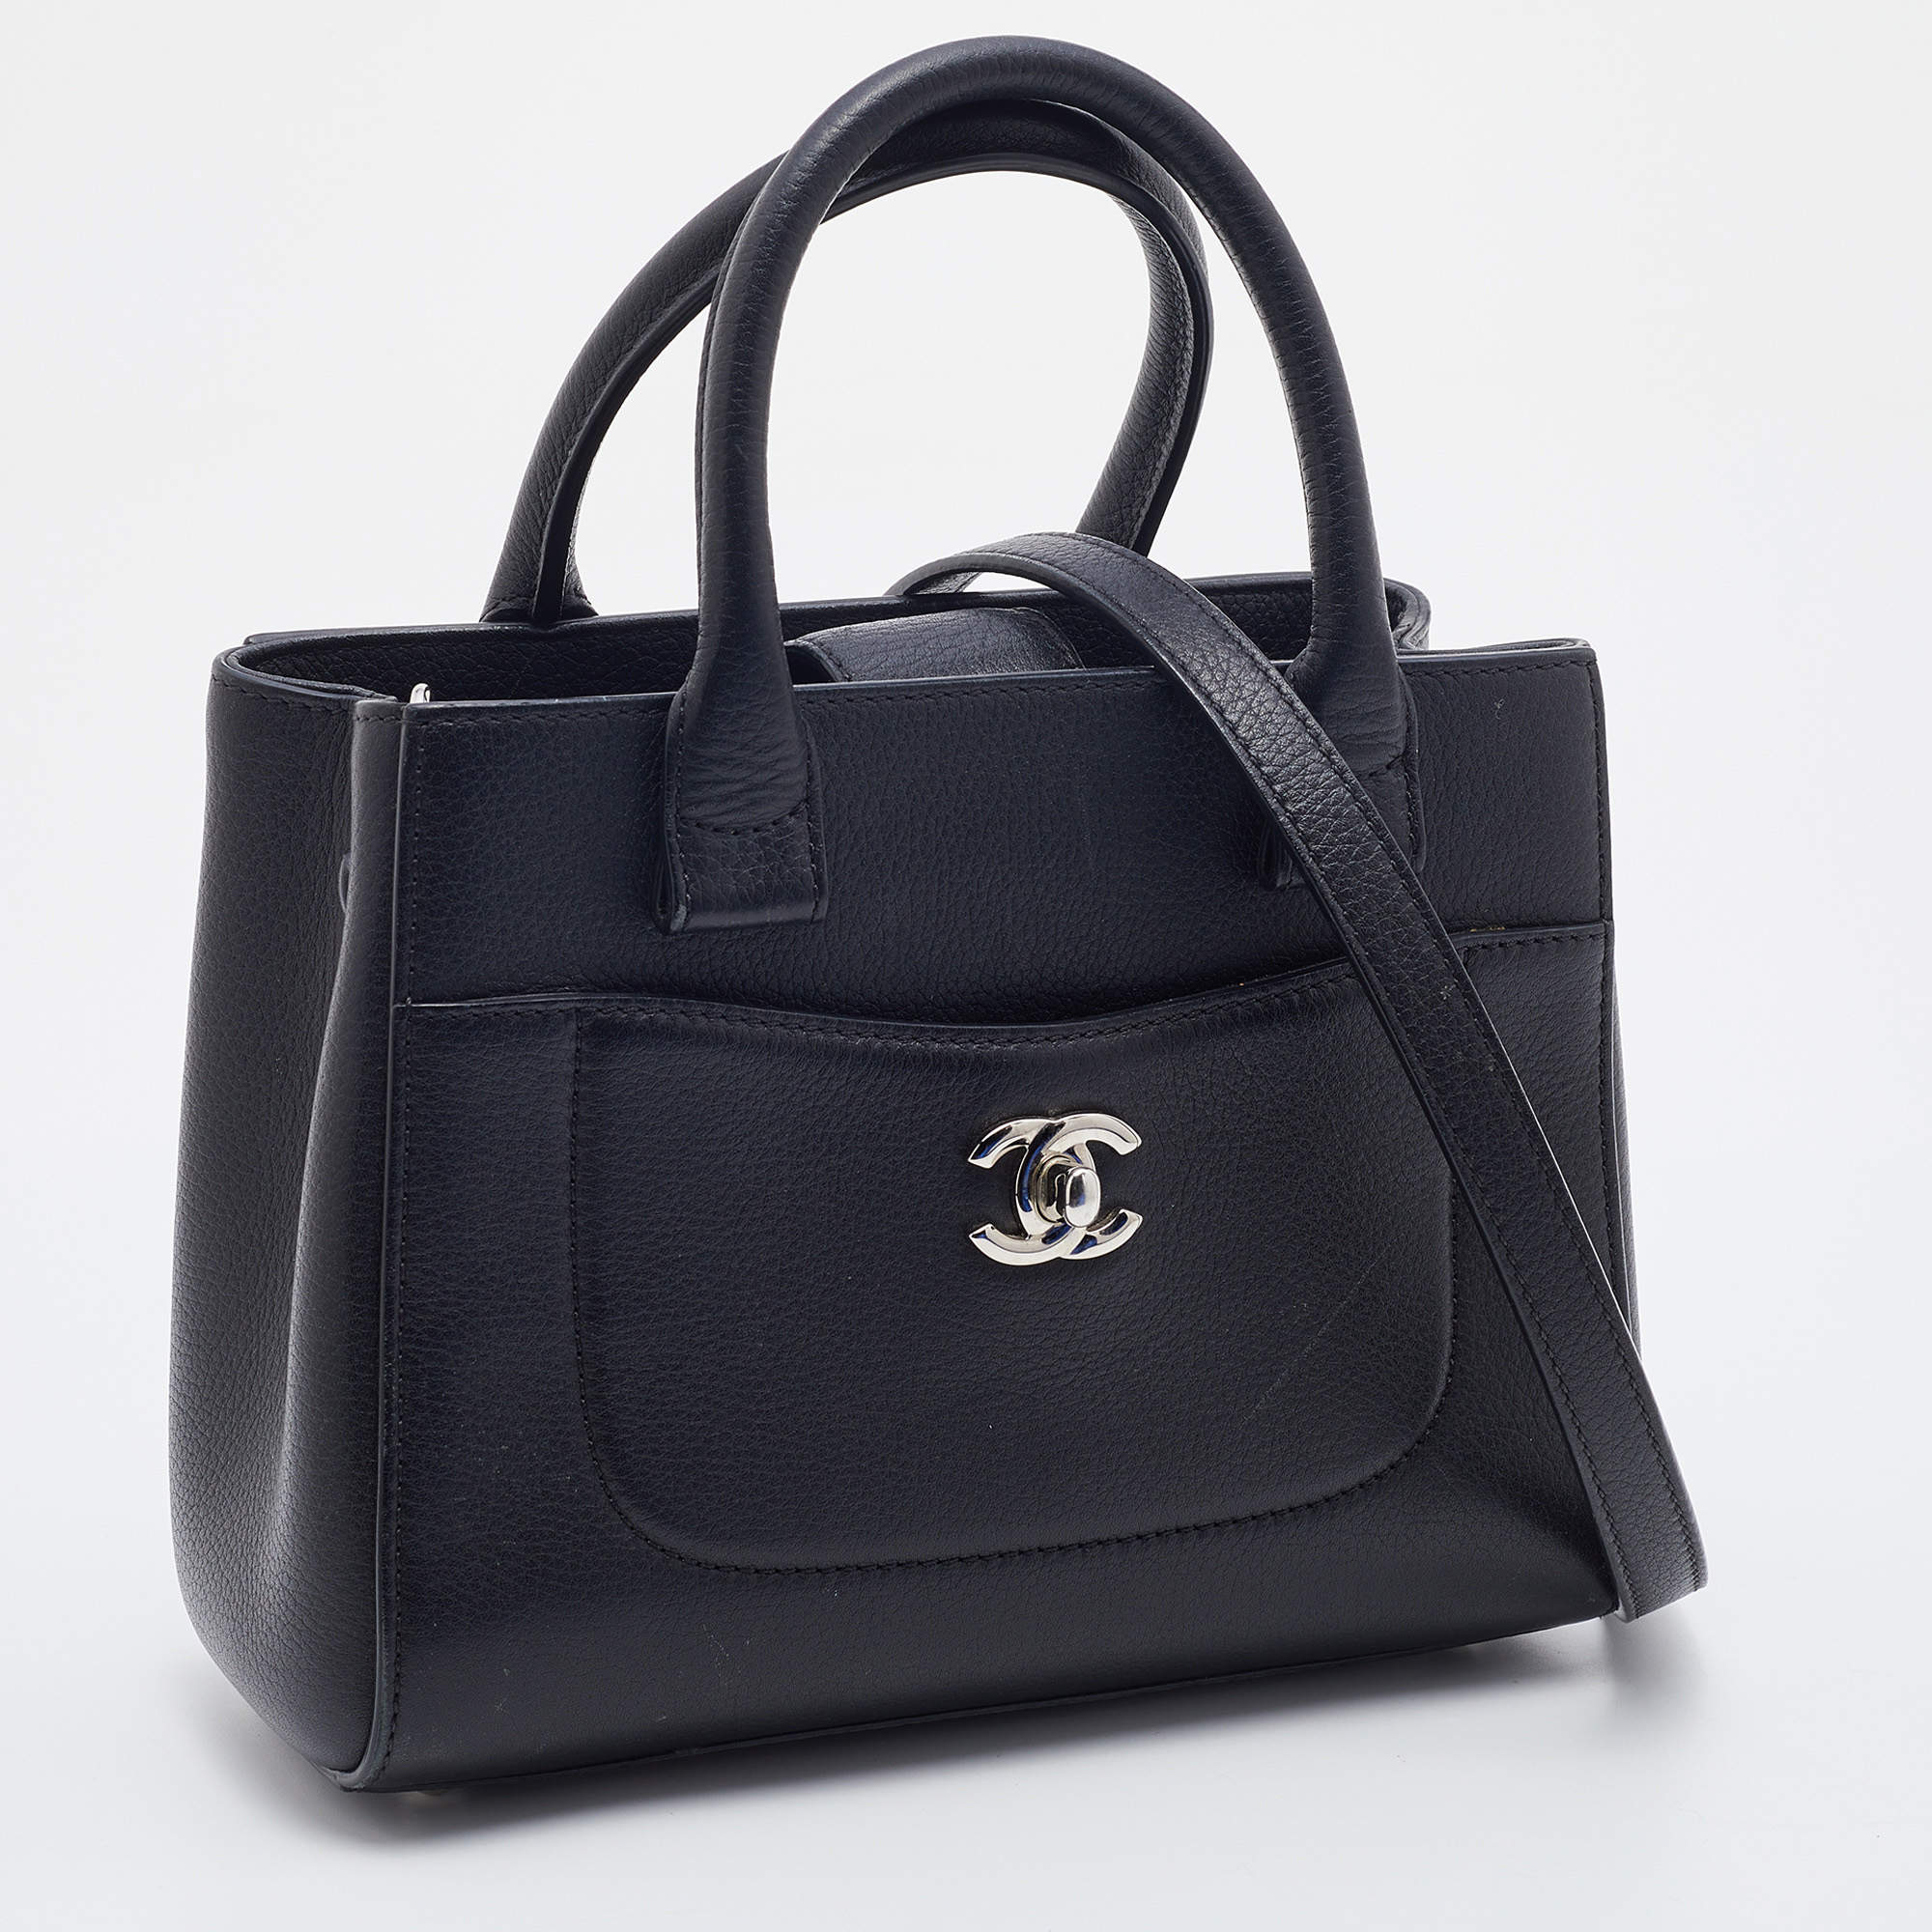 Chanel Executive Tote Bag White Leather Handbag Golden Hardware